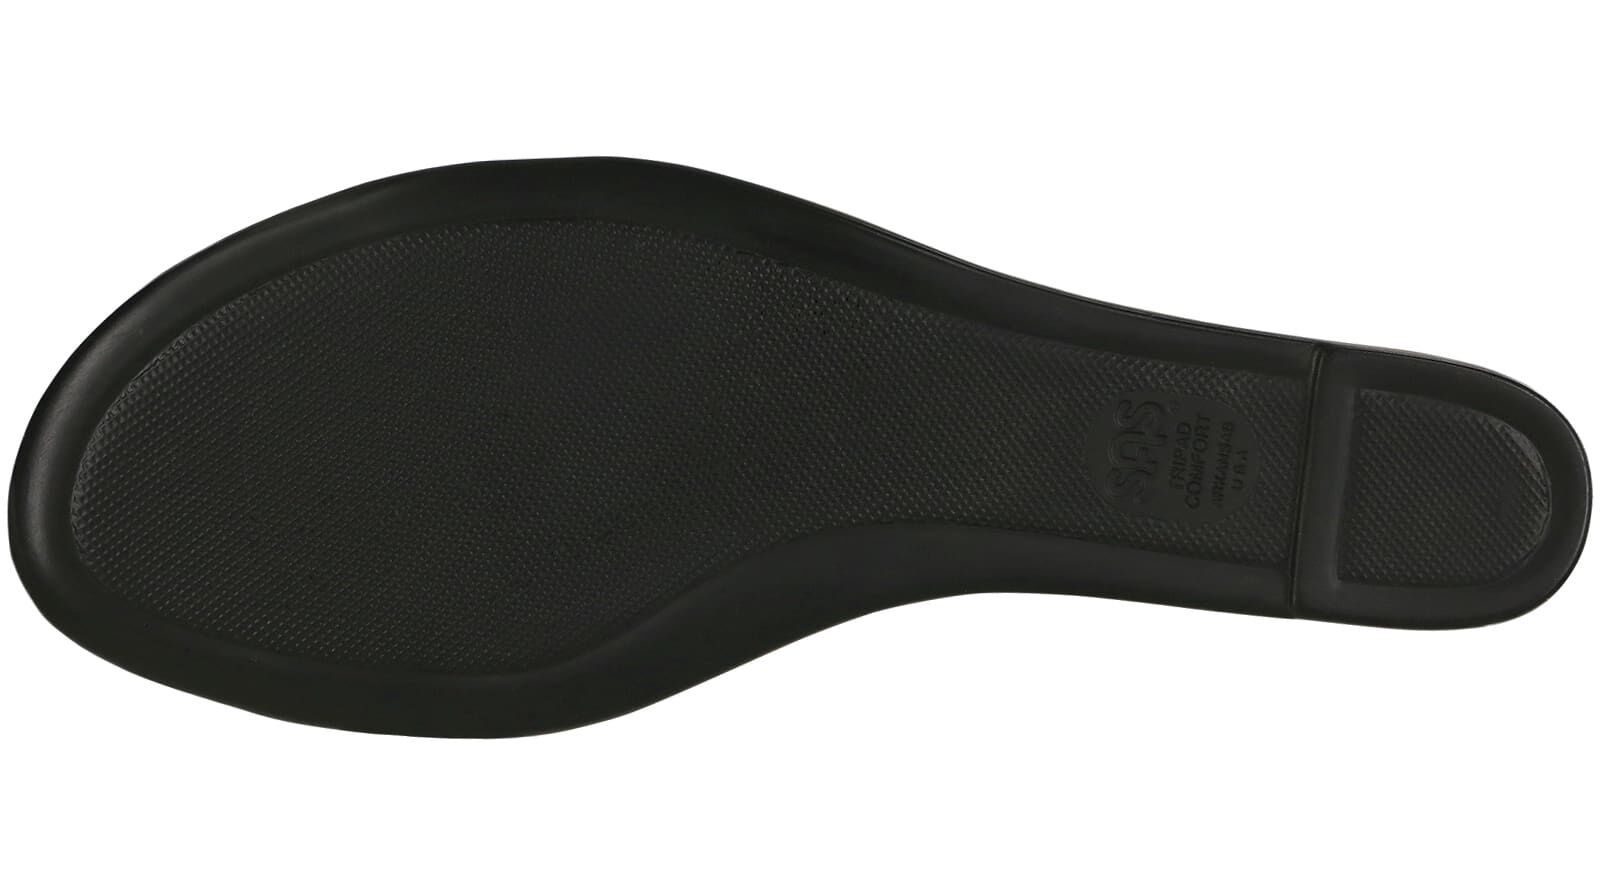 Aurora T-Strap Sandal | SAS Shoes